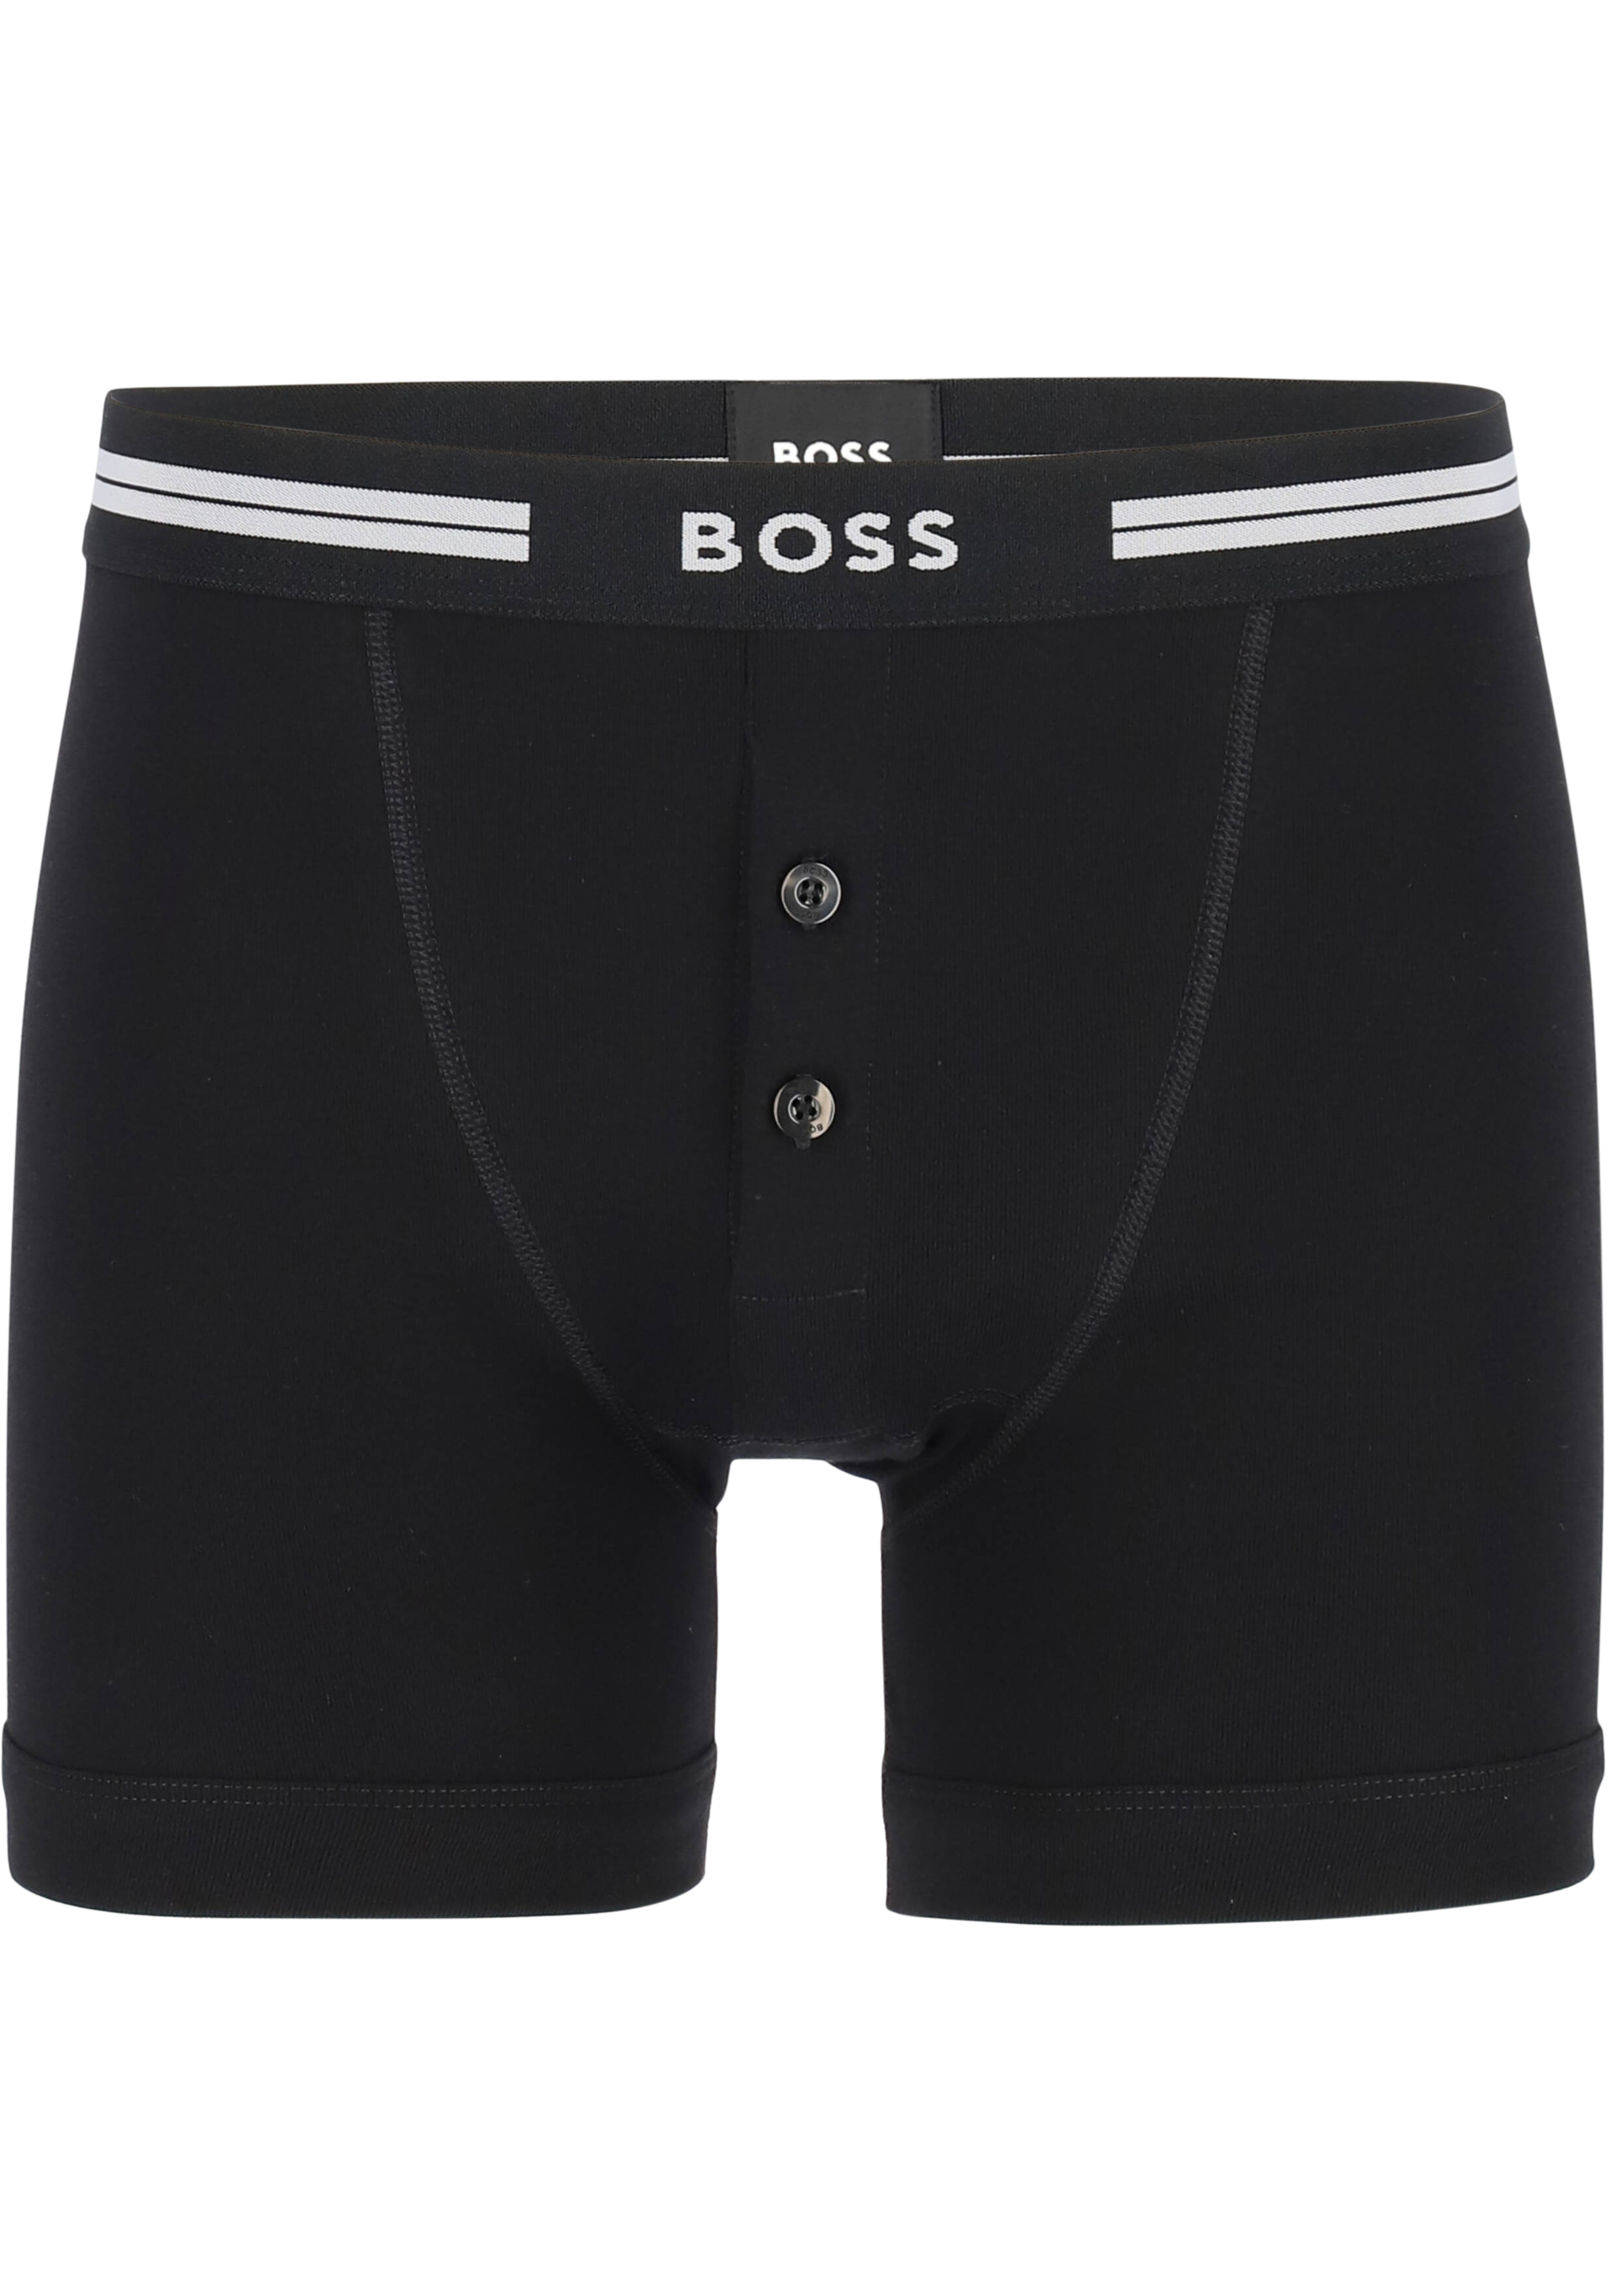 HUGO BOSS Original retro trunk (1-pack), heren boxer normale lengte met gulp, zwart